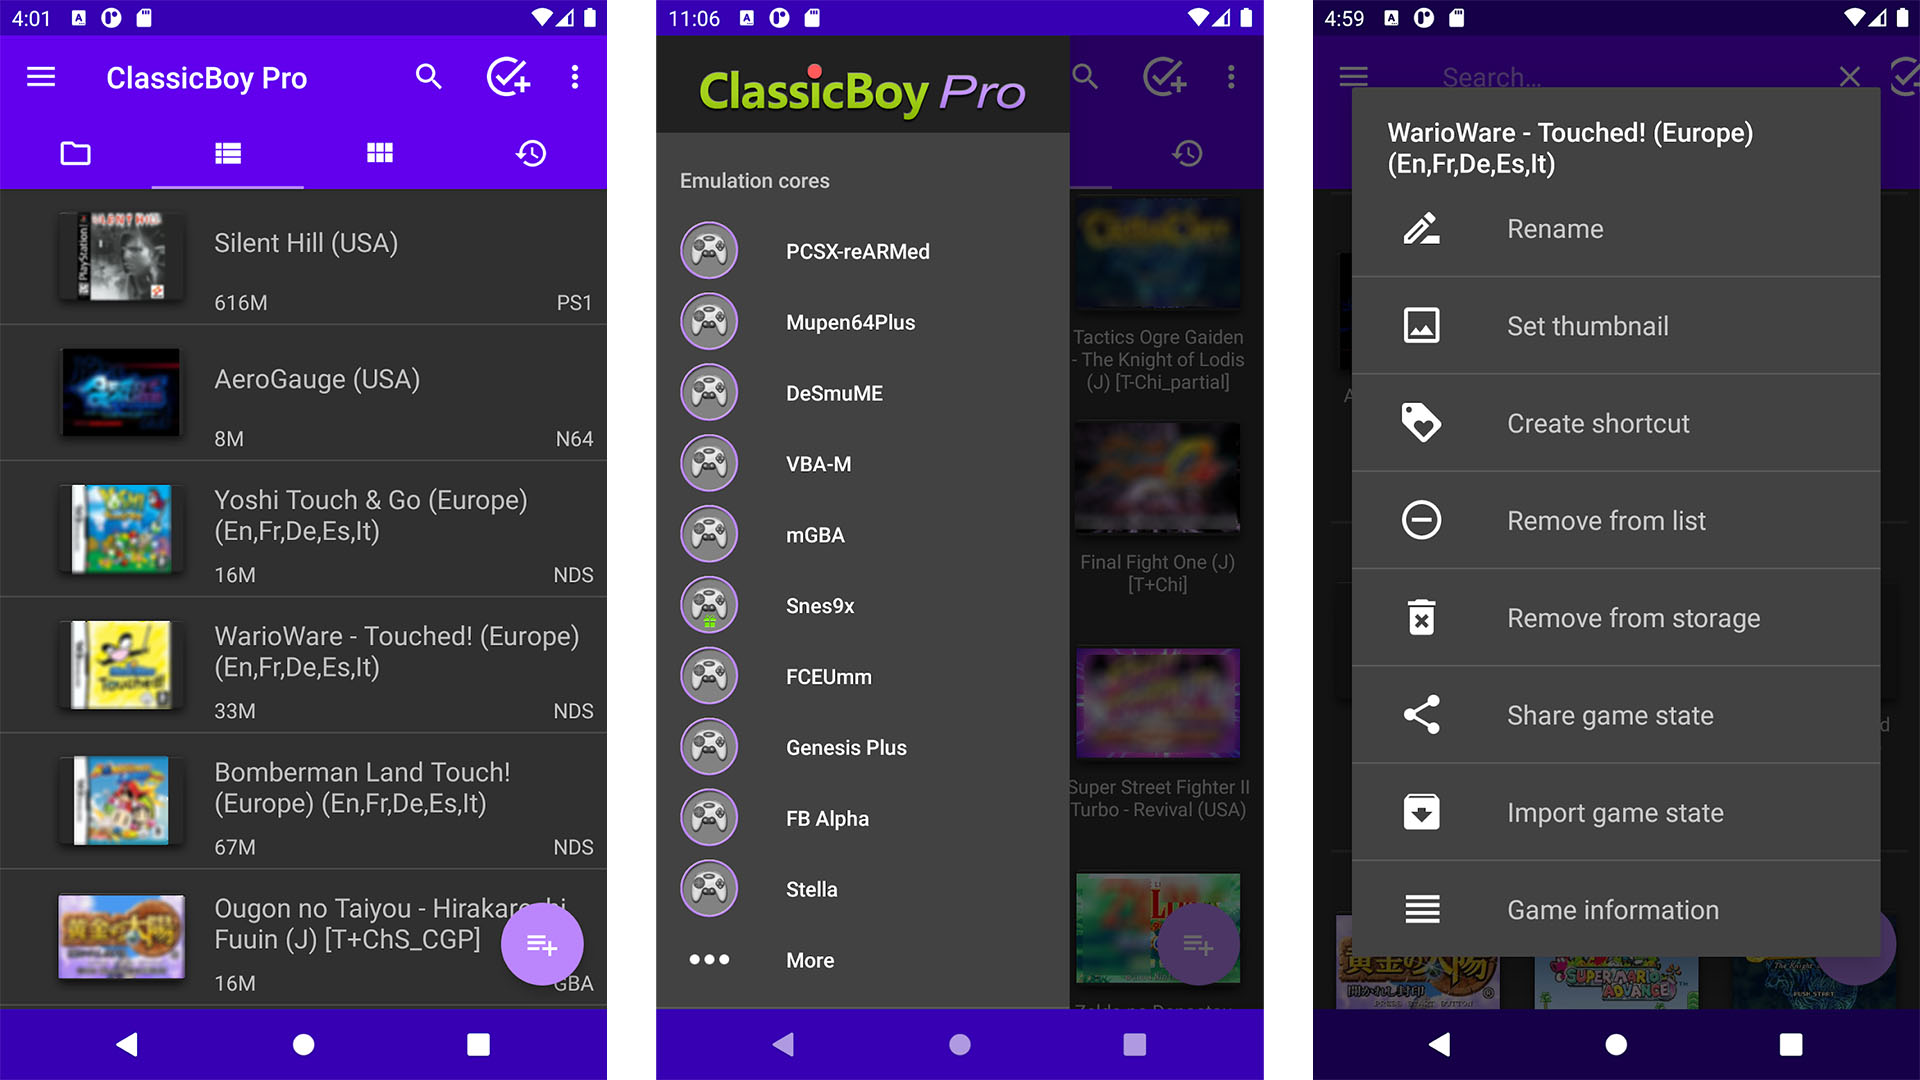 ClassicBoy Pro screenshot 2022